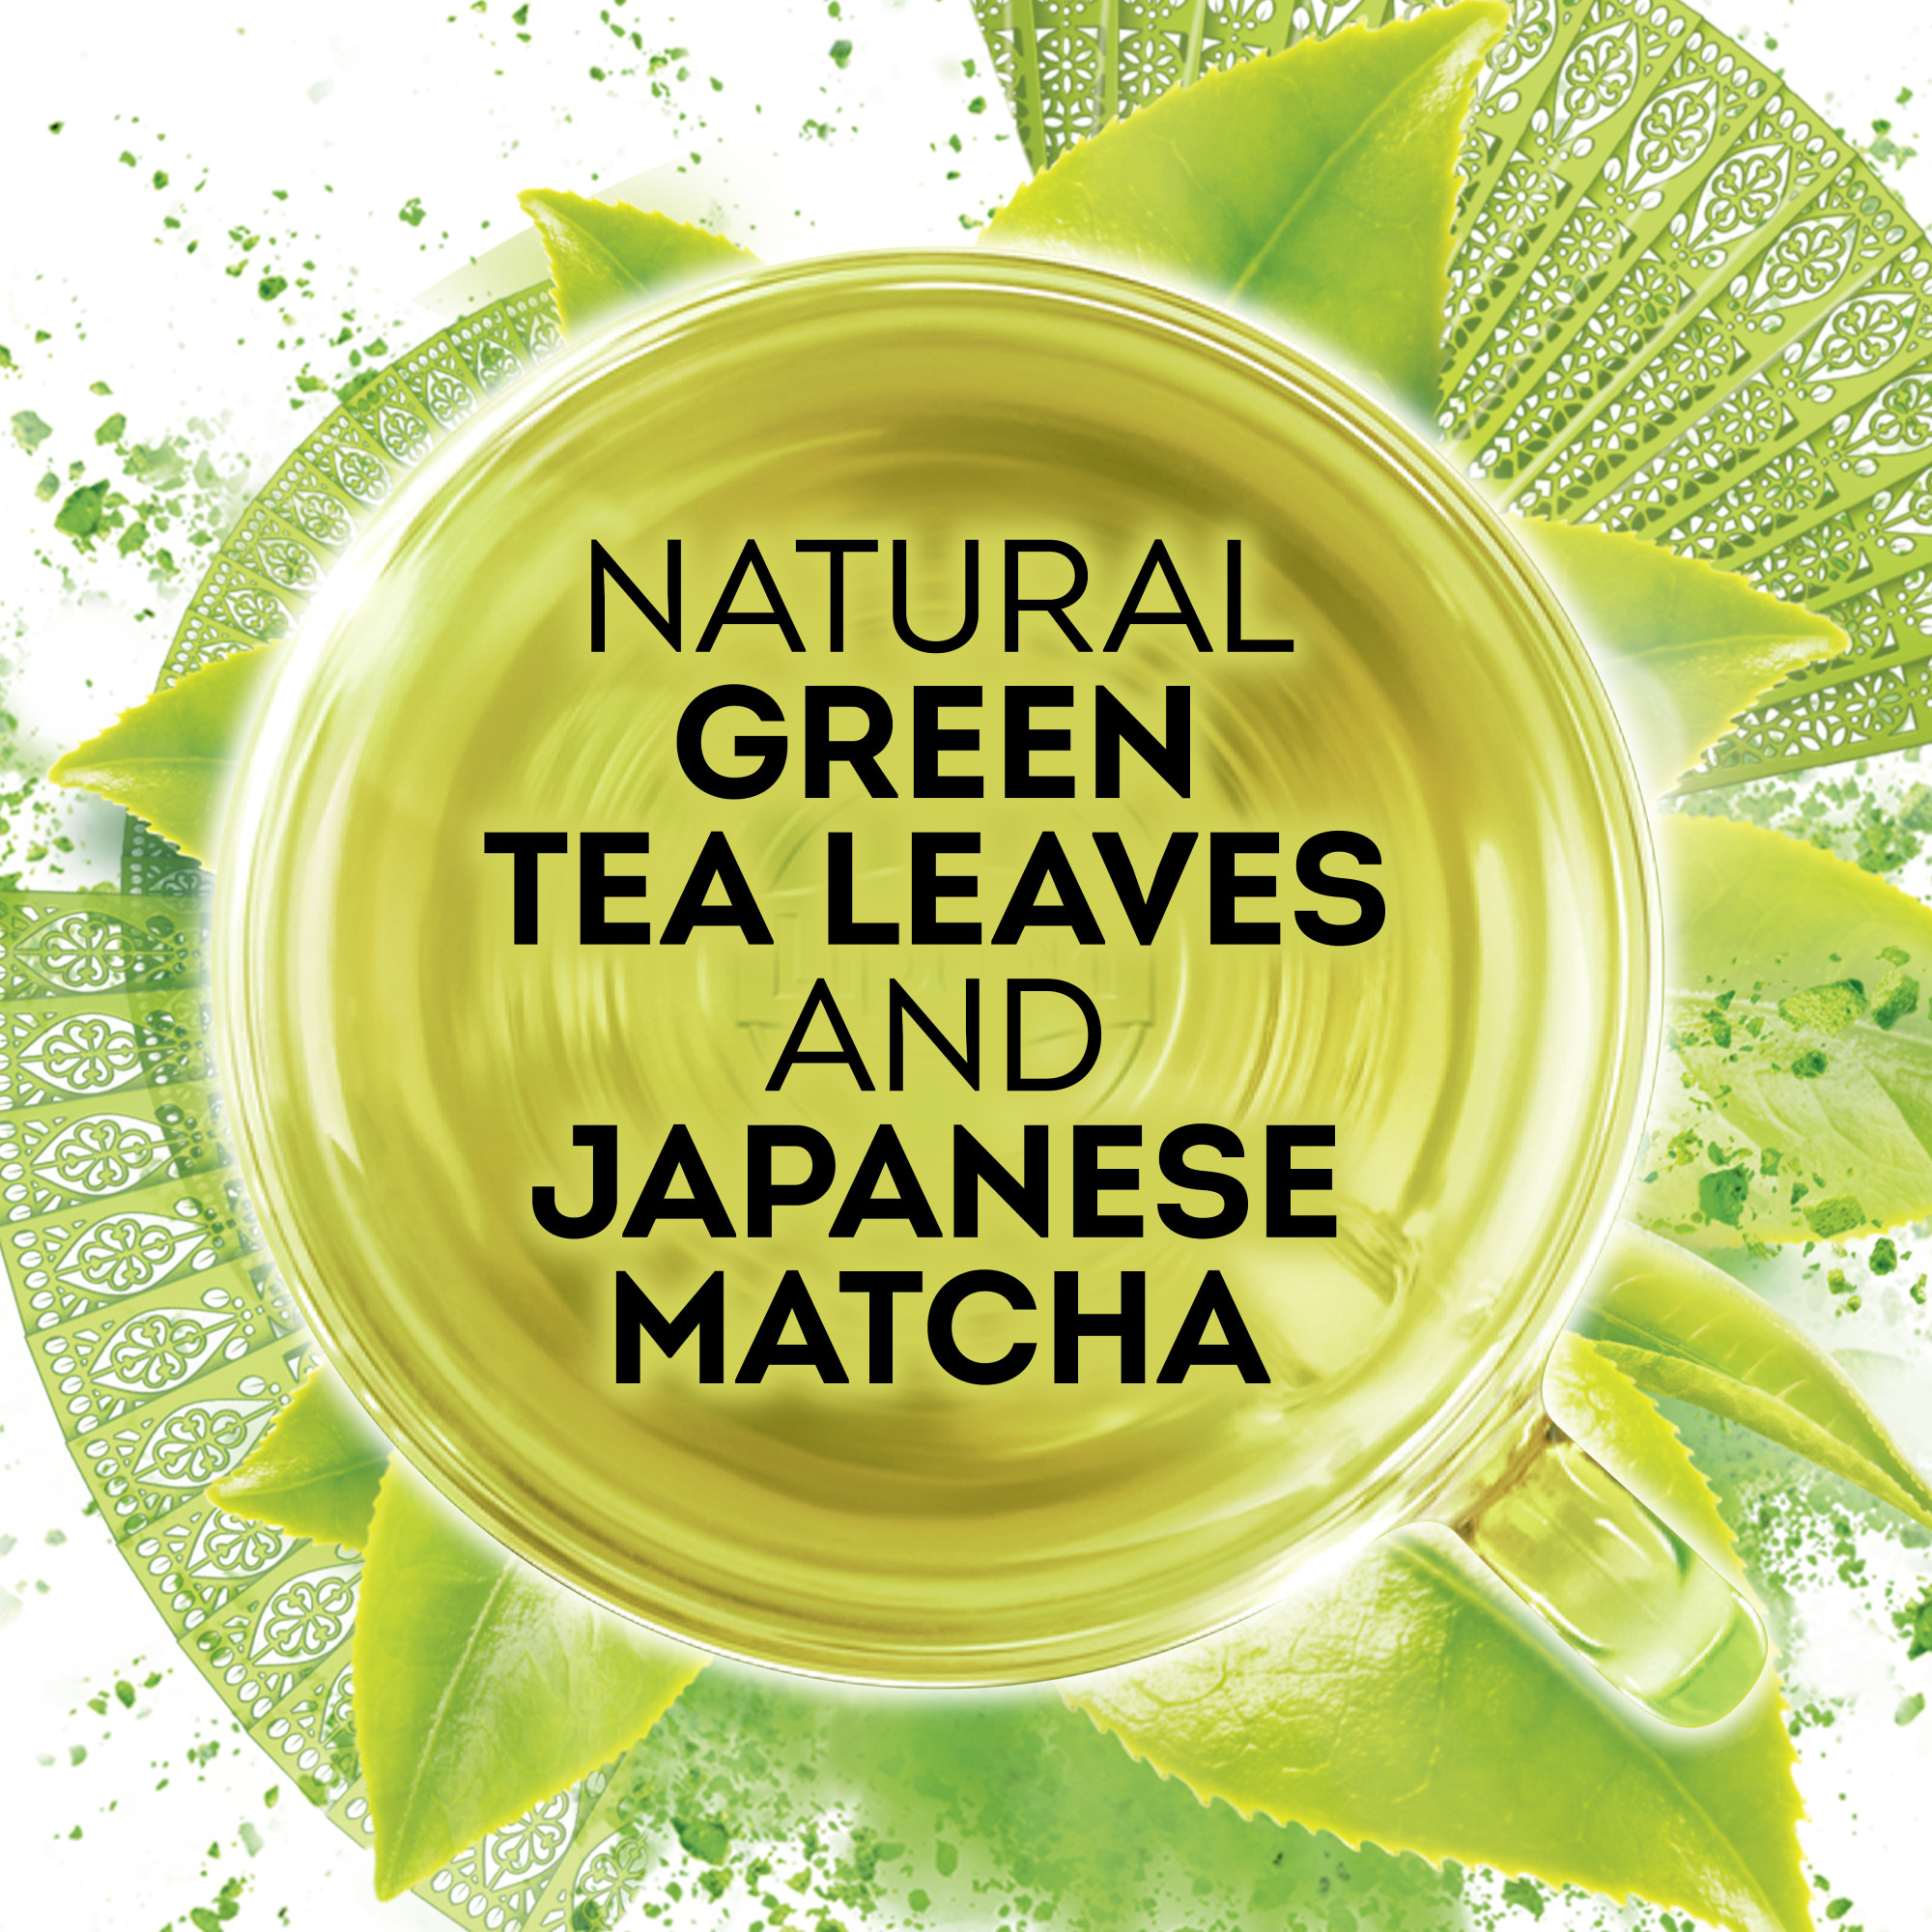 Lipton Magnificent Matcha Green Tea, Caffeinated, Tea Bags 15 Count - image 4 of 9